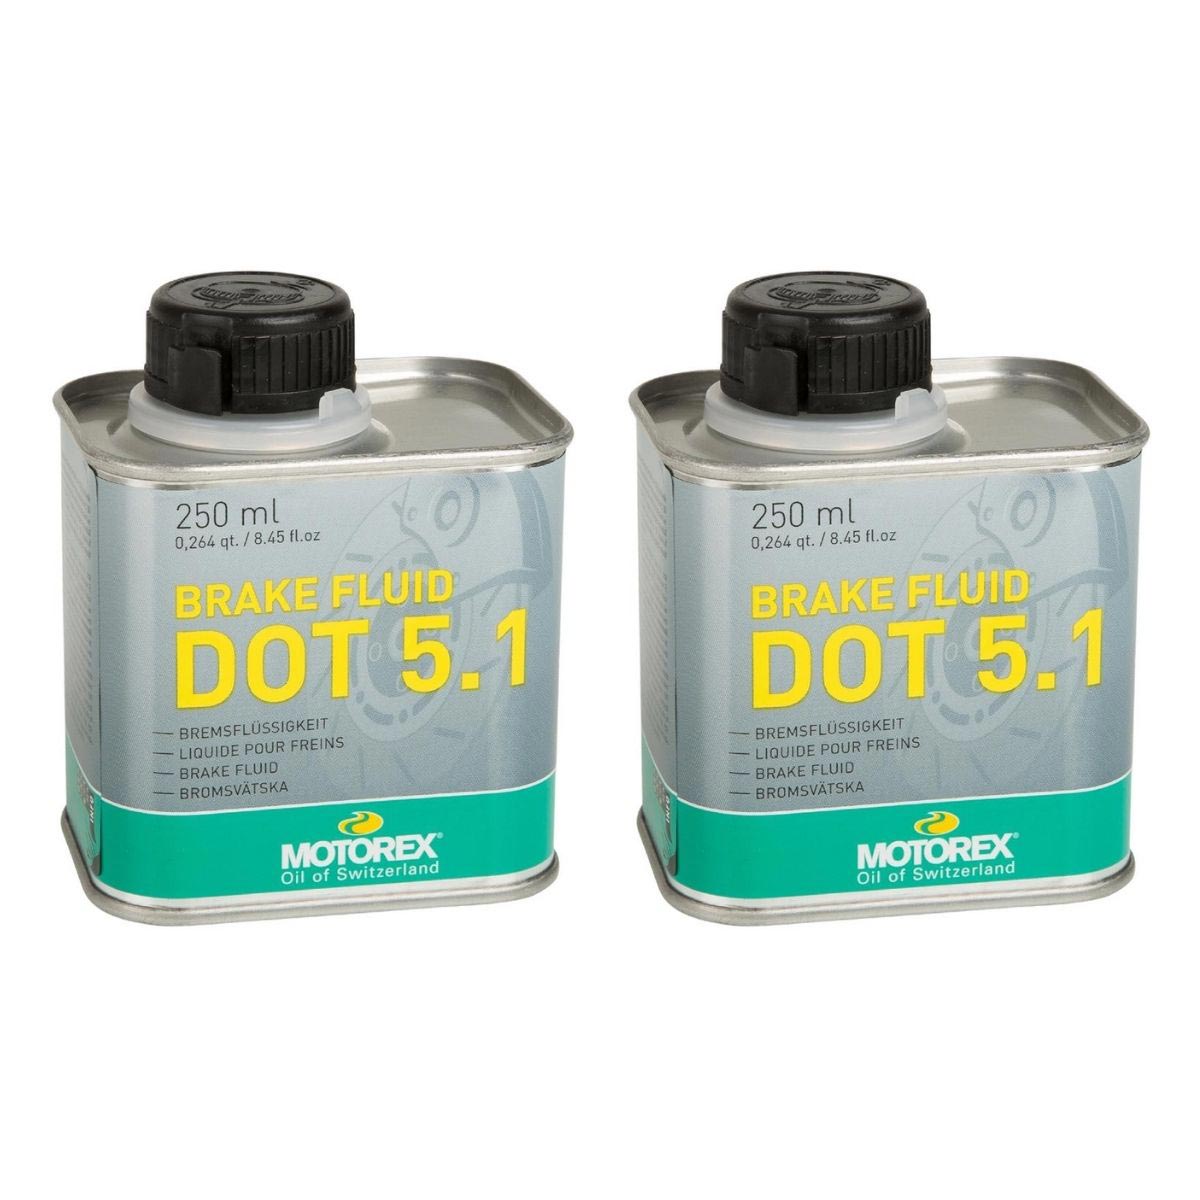 Motorex Liquide de Frein DOT 5.1 Set de 2, 250 ml chacun